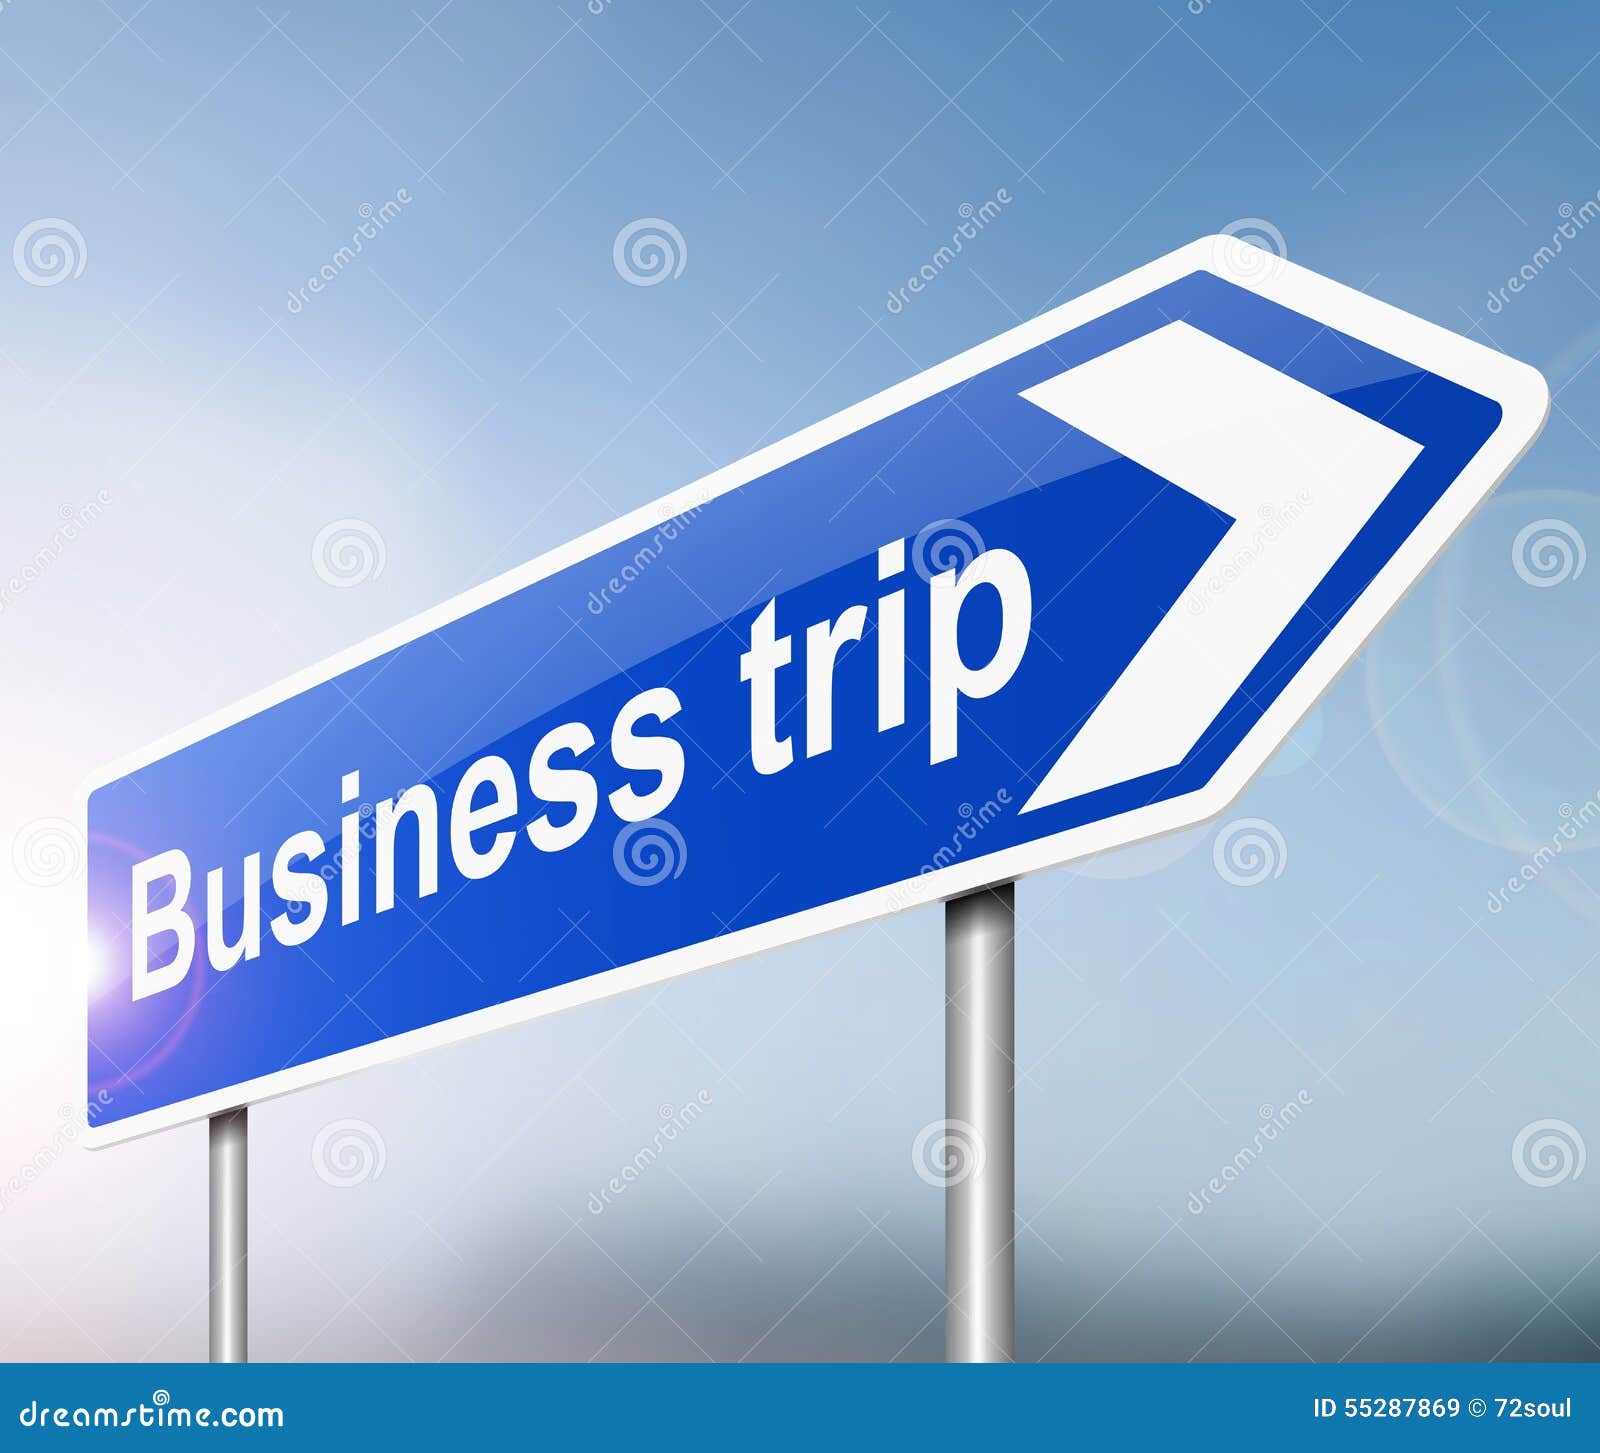 https://thumbs.dreamstime.com/z/business-trip-concept-illustration-depicting-sign-55287869.jpg